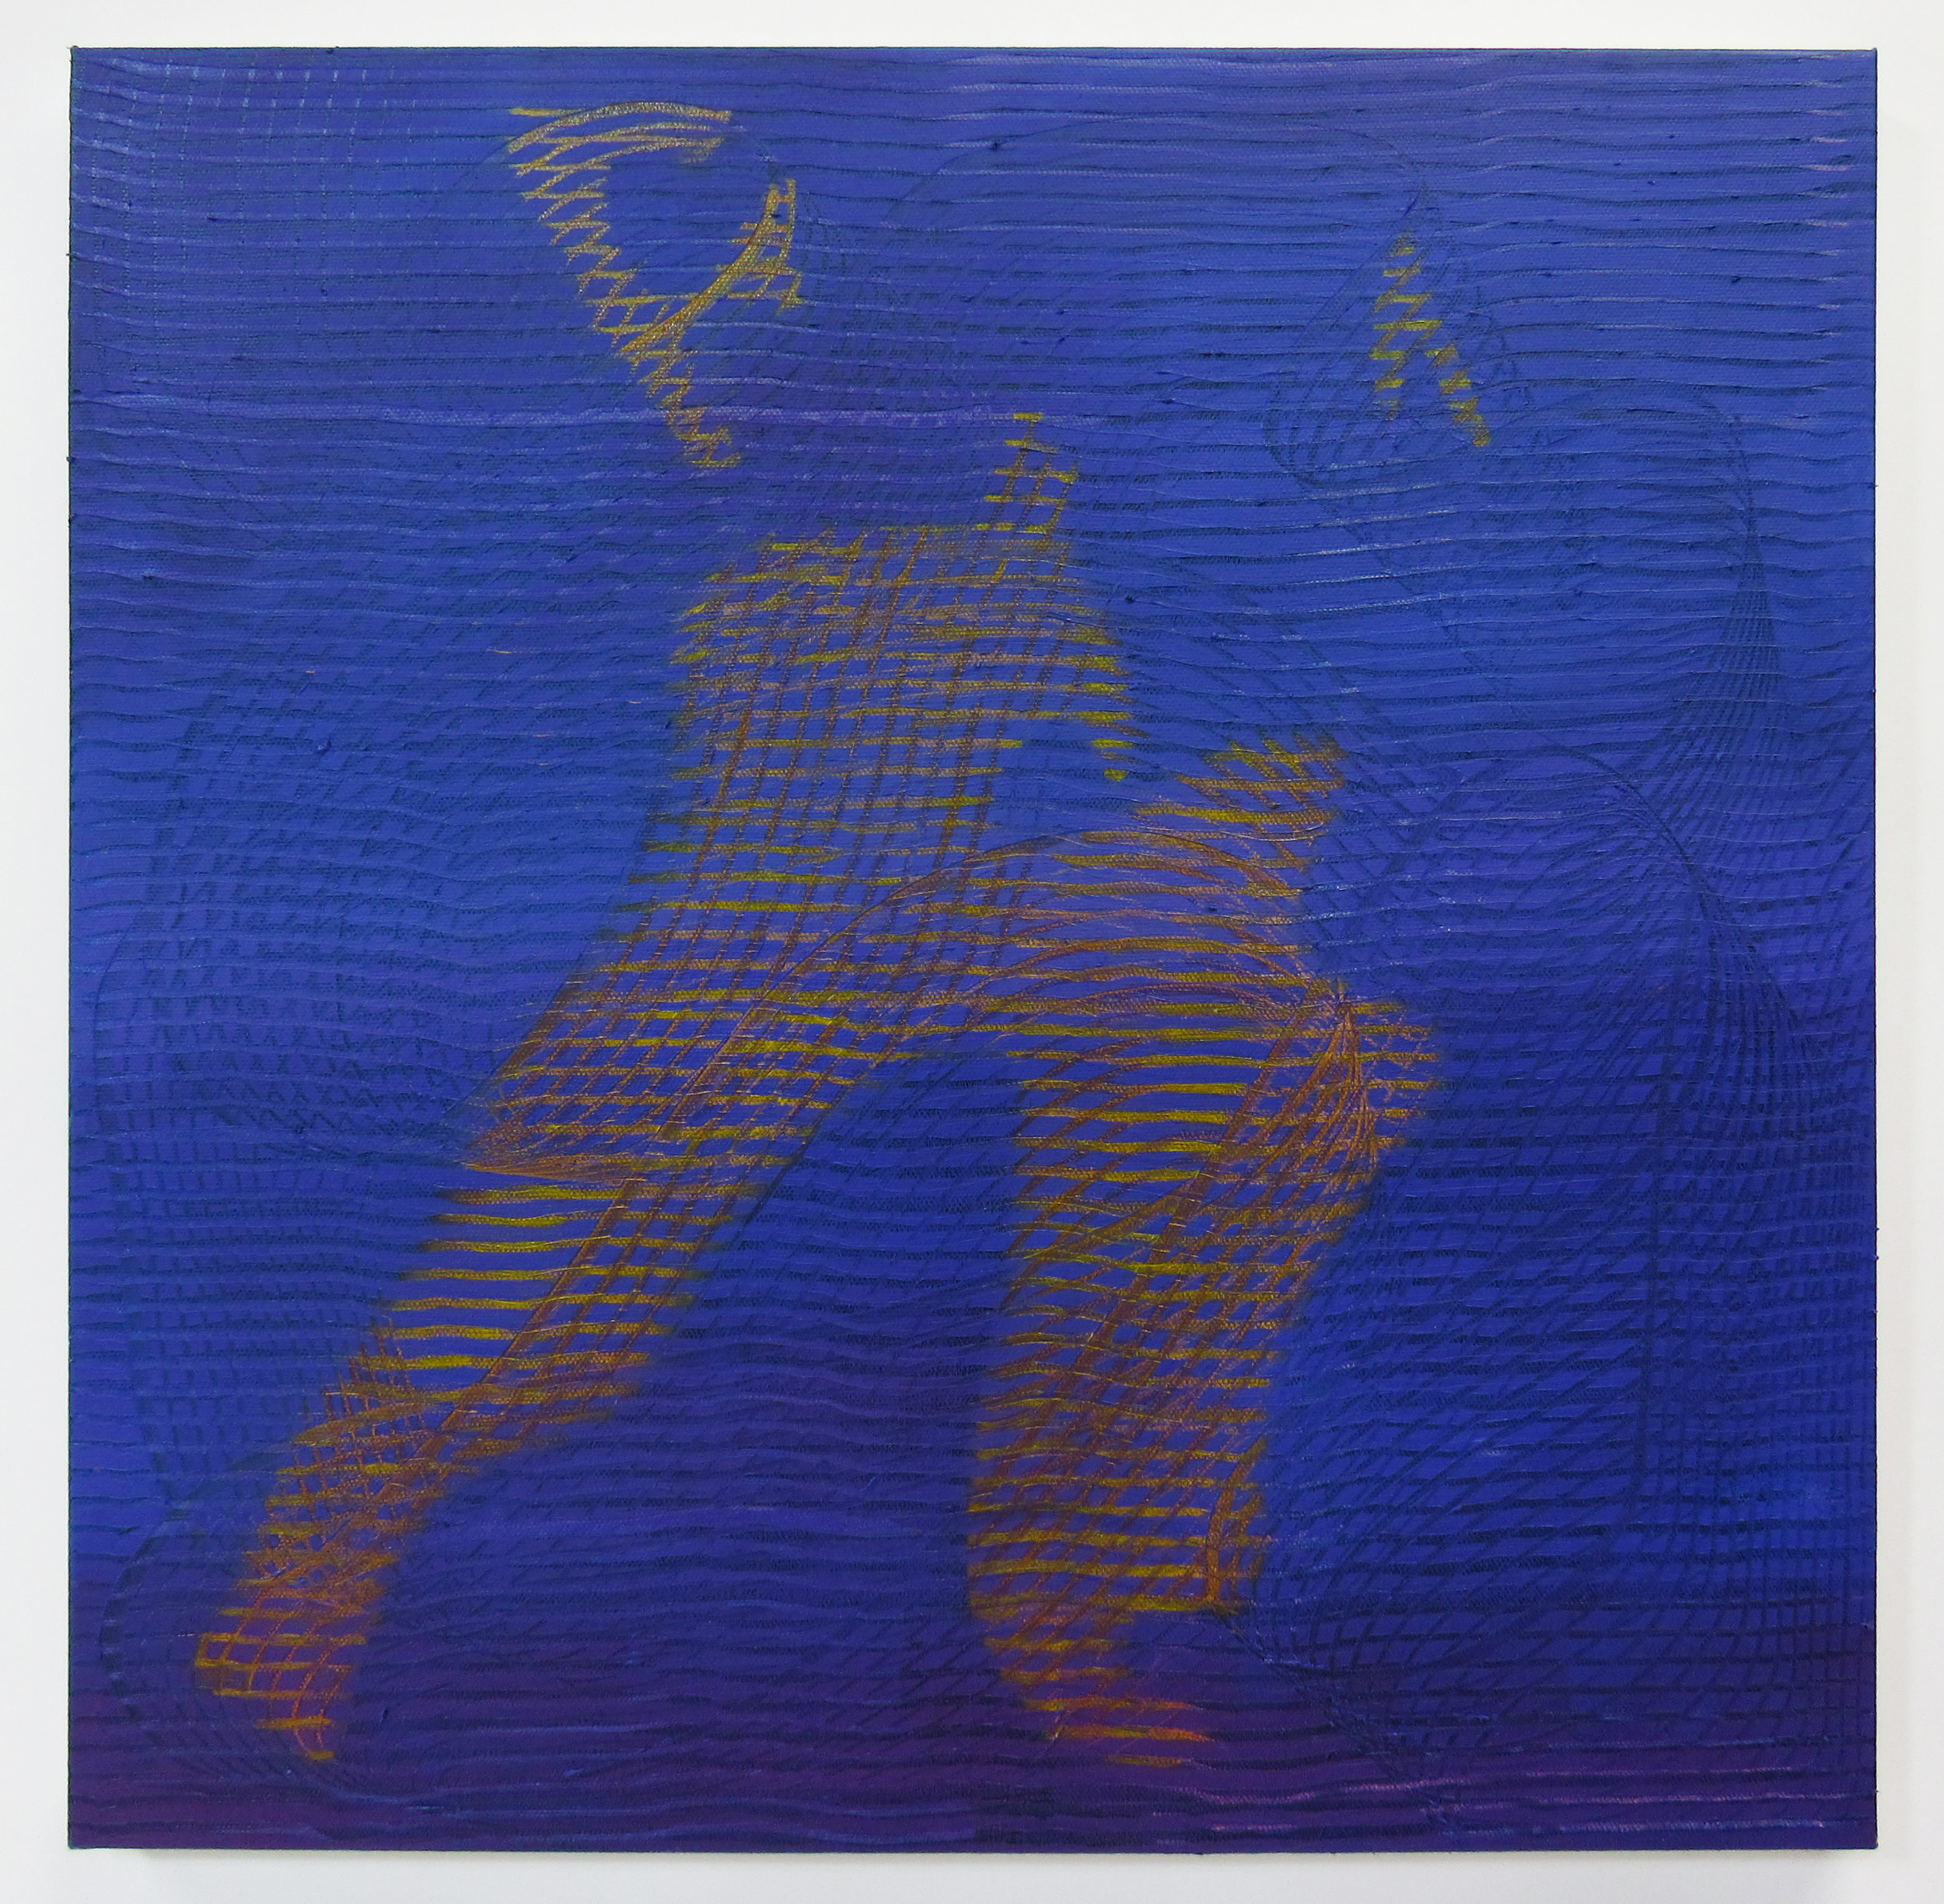   Emerge   18x18” oil on canvas, 2017 